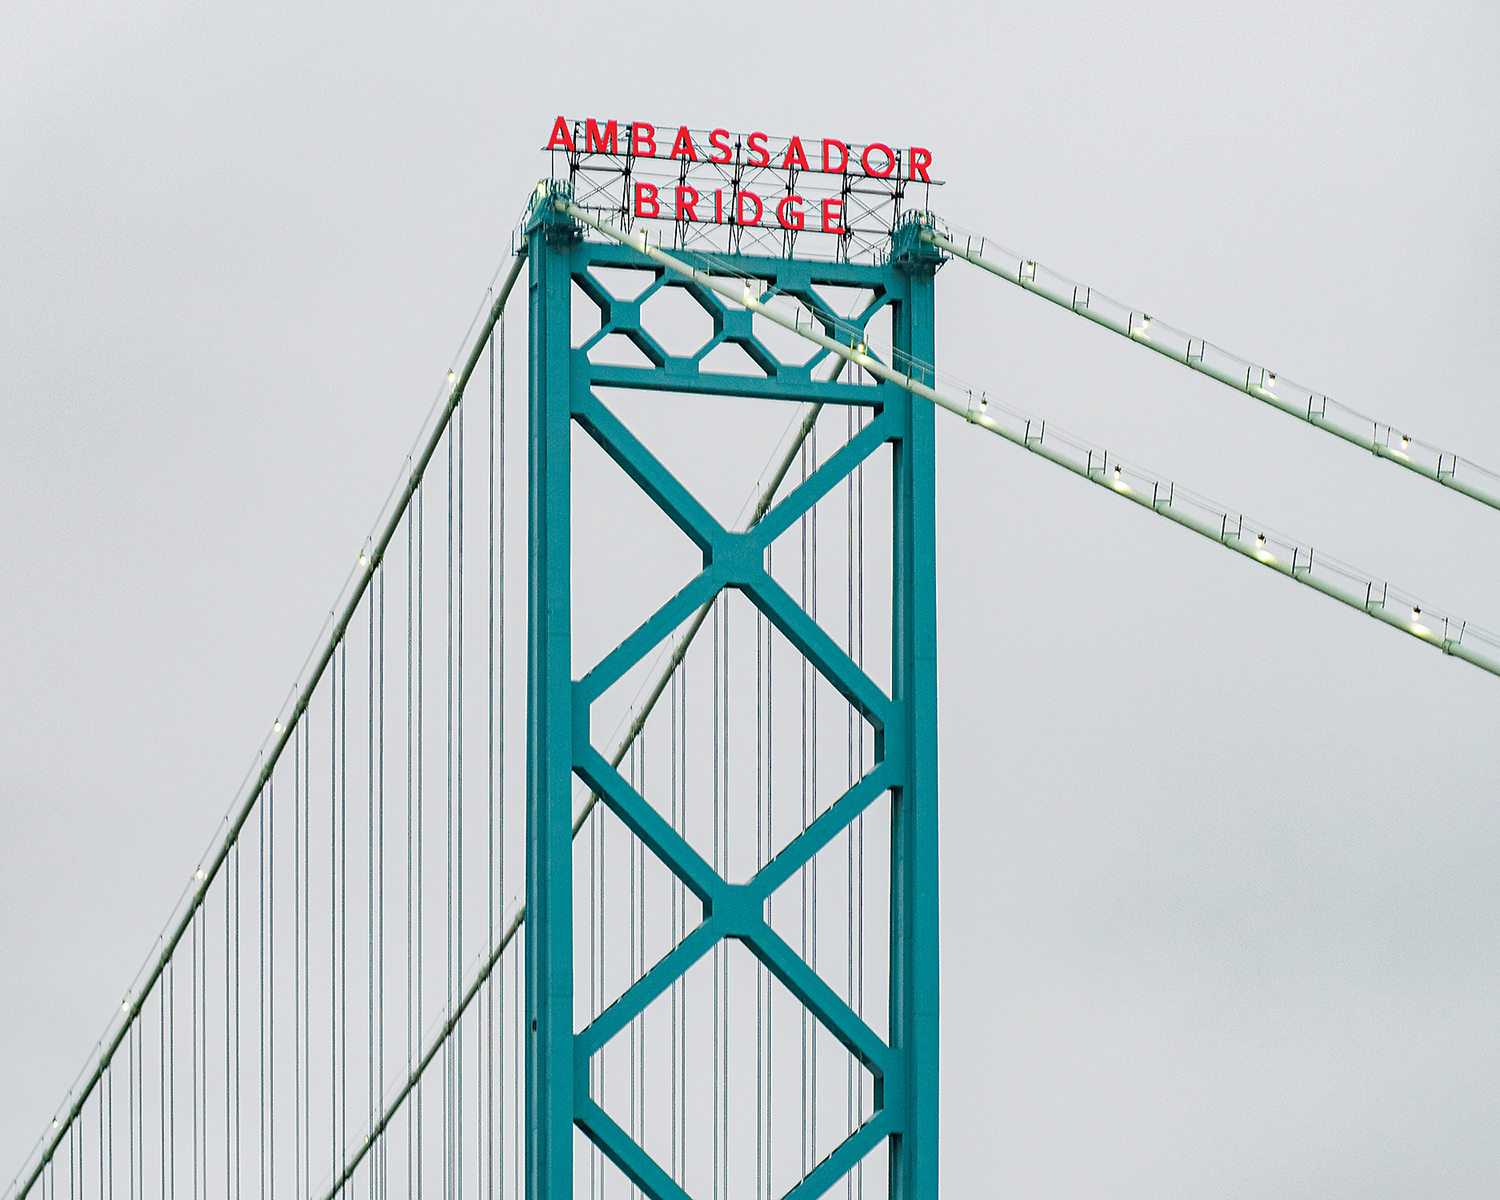 Suspension bridge’s name lit on cloudy day